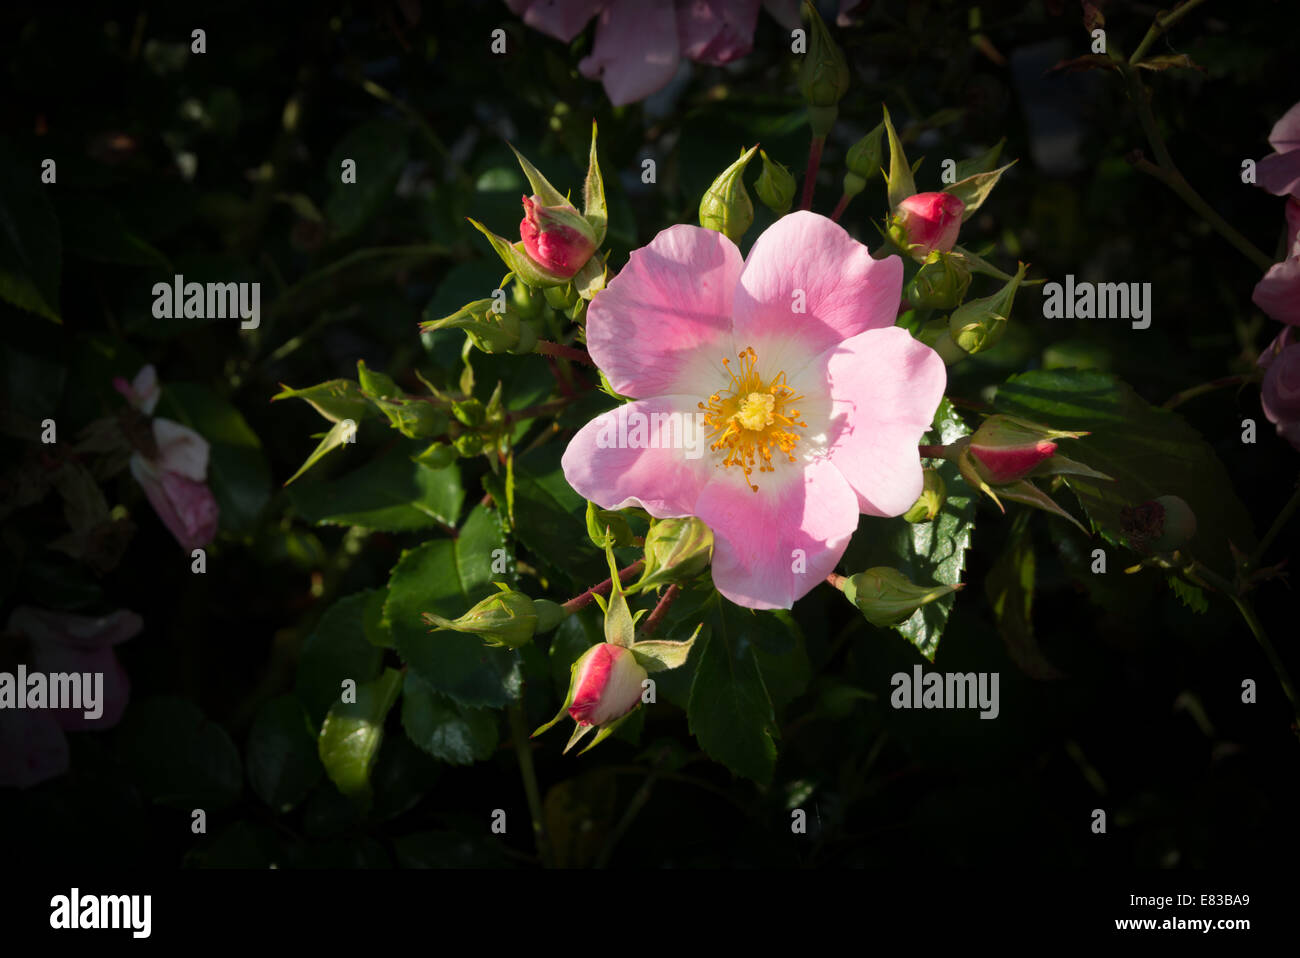 Wild Rose naturel avec les boutons. Rosa rugosa rose ou Dog rose libre en septembre jardin. Banque D'Images